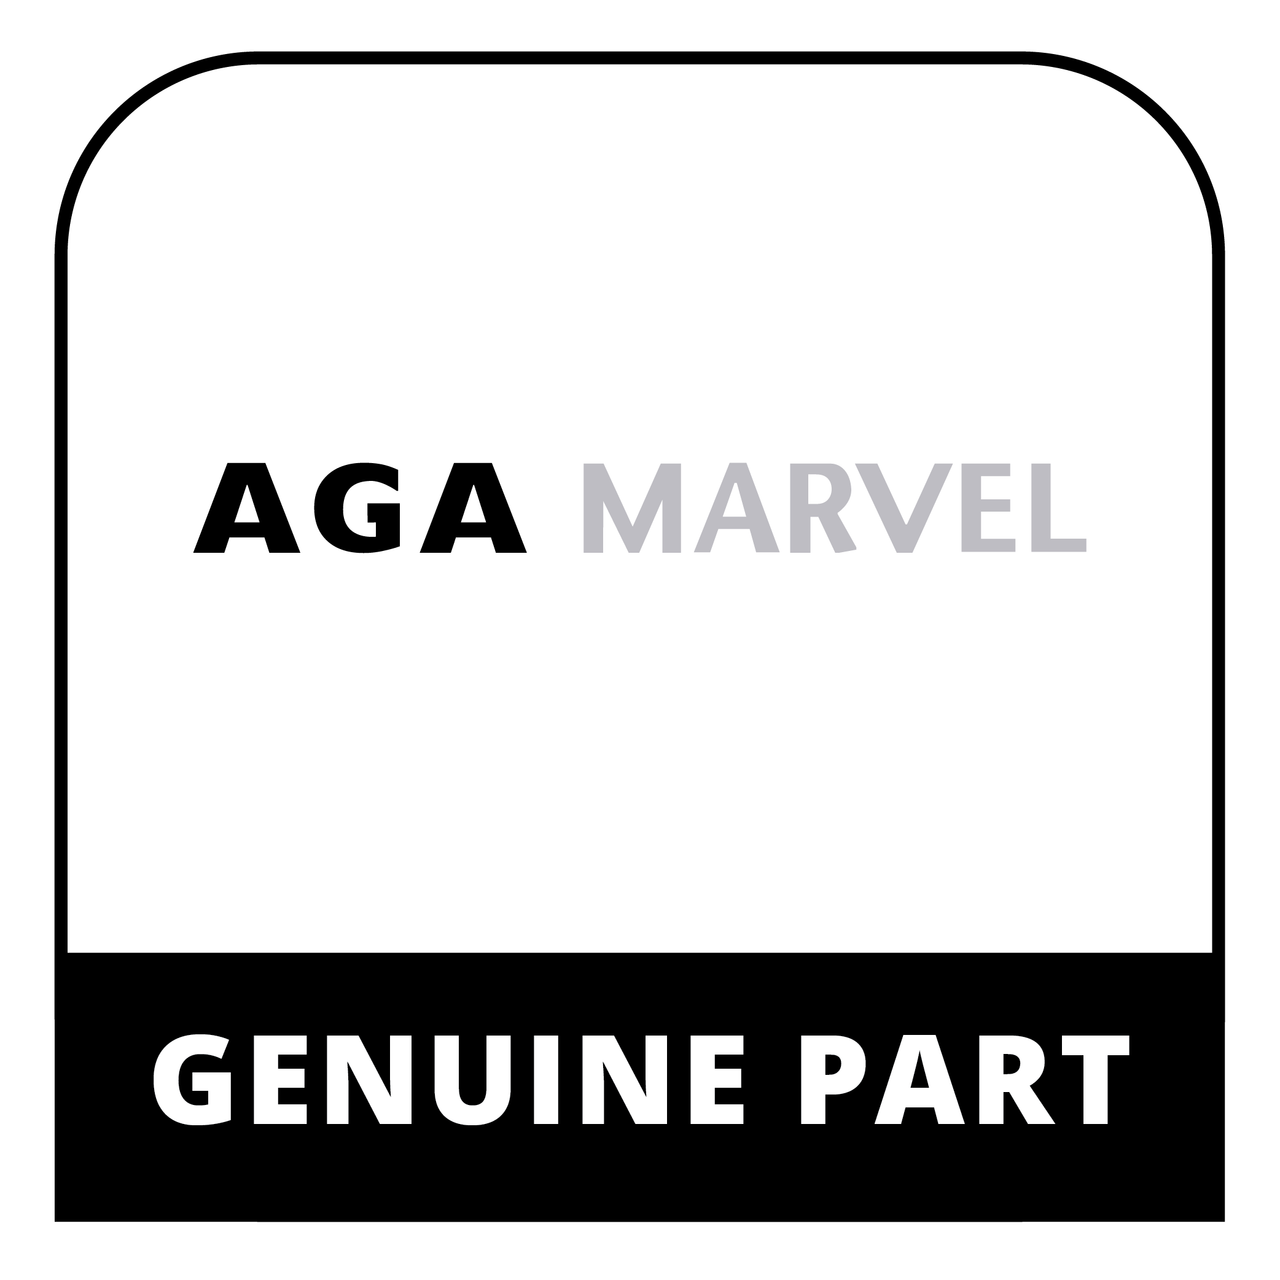 AGA Marvel R3071 - Scw 1/4 X 1.1/2 Hex S/S - Genuine AGA Marvel Part